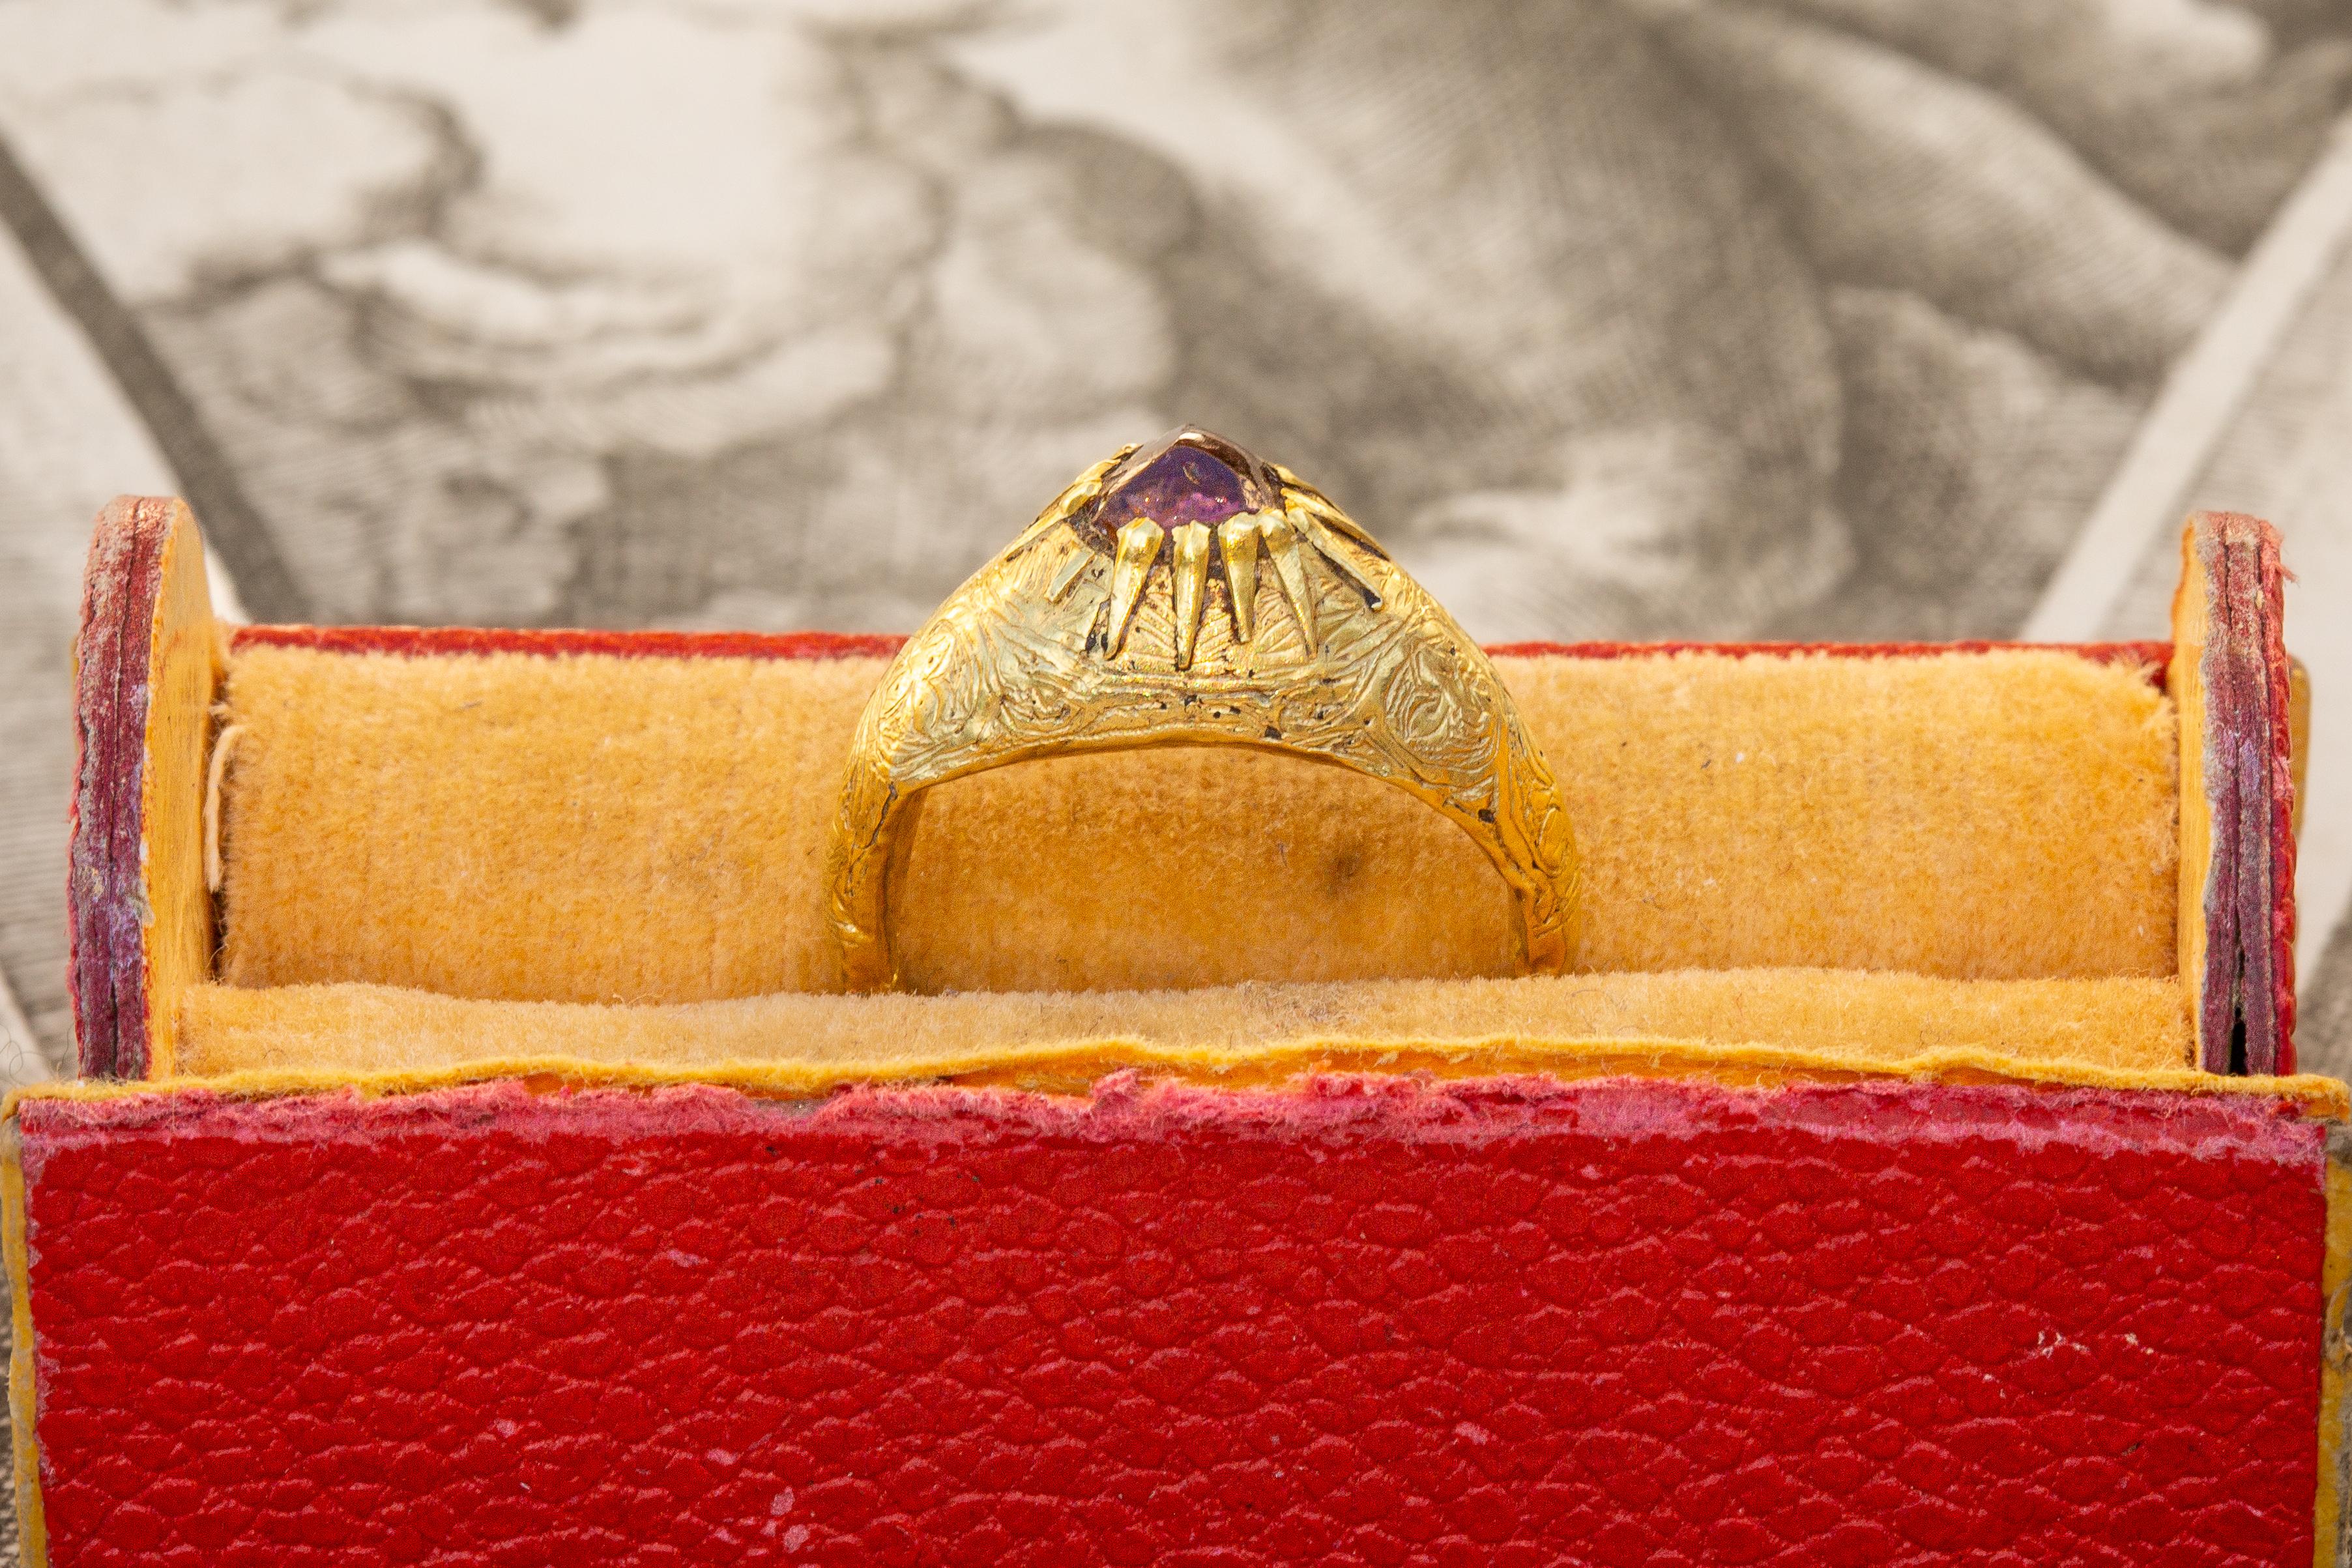 Antique Islamic Seljuk ‘Selçuklu’ Period Gold Ring with Garnet 12th Century AD 1